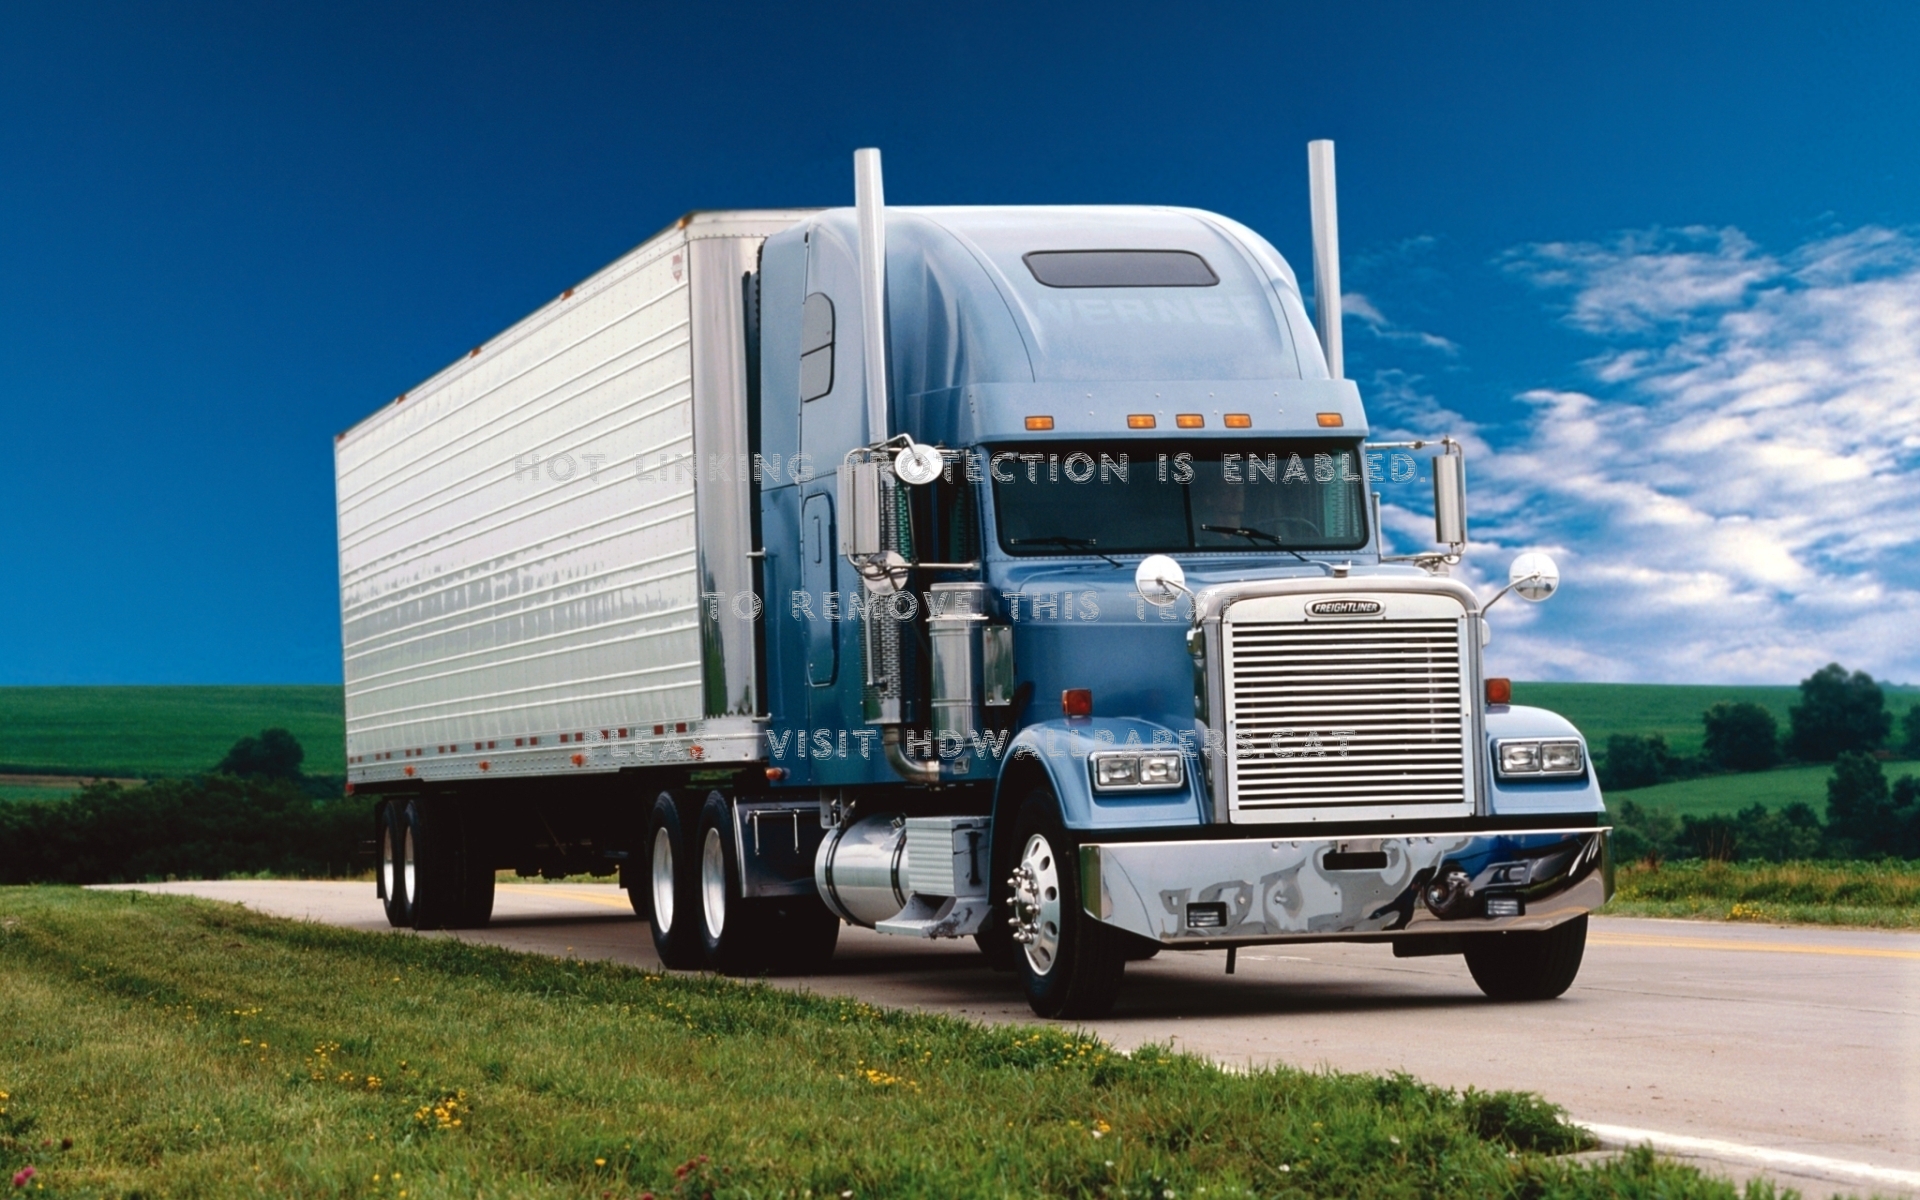 Freightliner Diesel Truck 18wheeler Cars - Freightliner Truck And Trailer - HD Wallpaper 